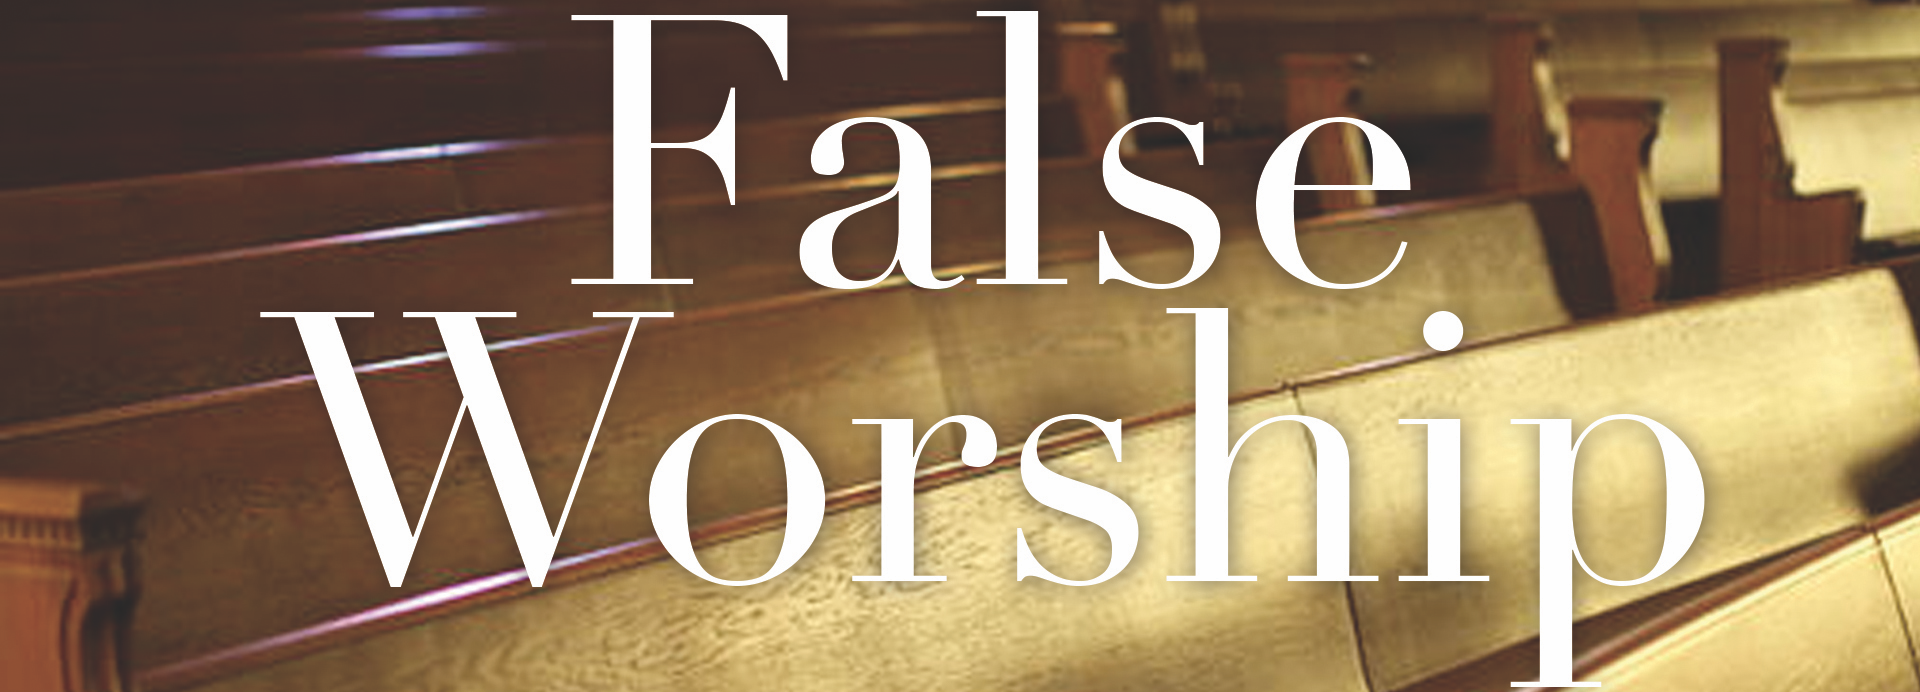 WOODSTREAM » False Worship.png